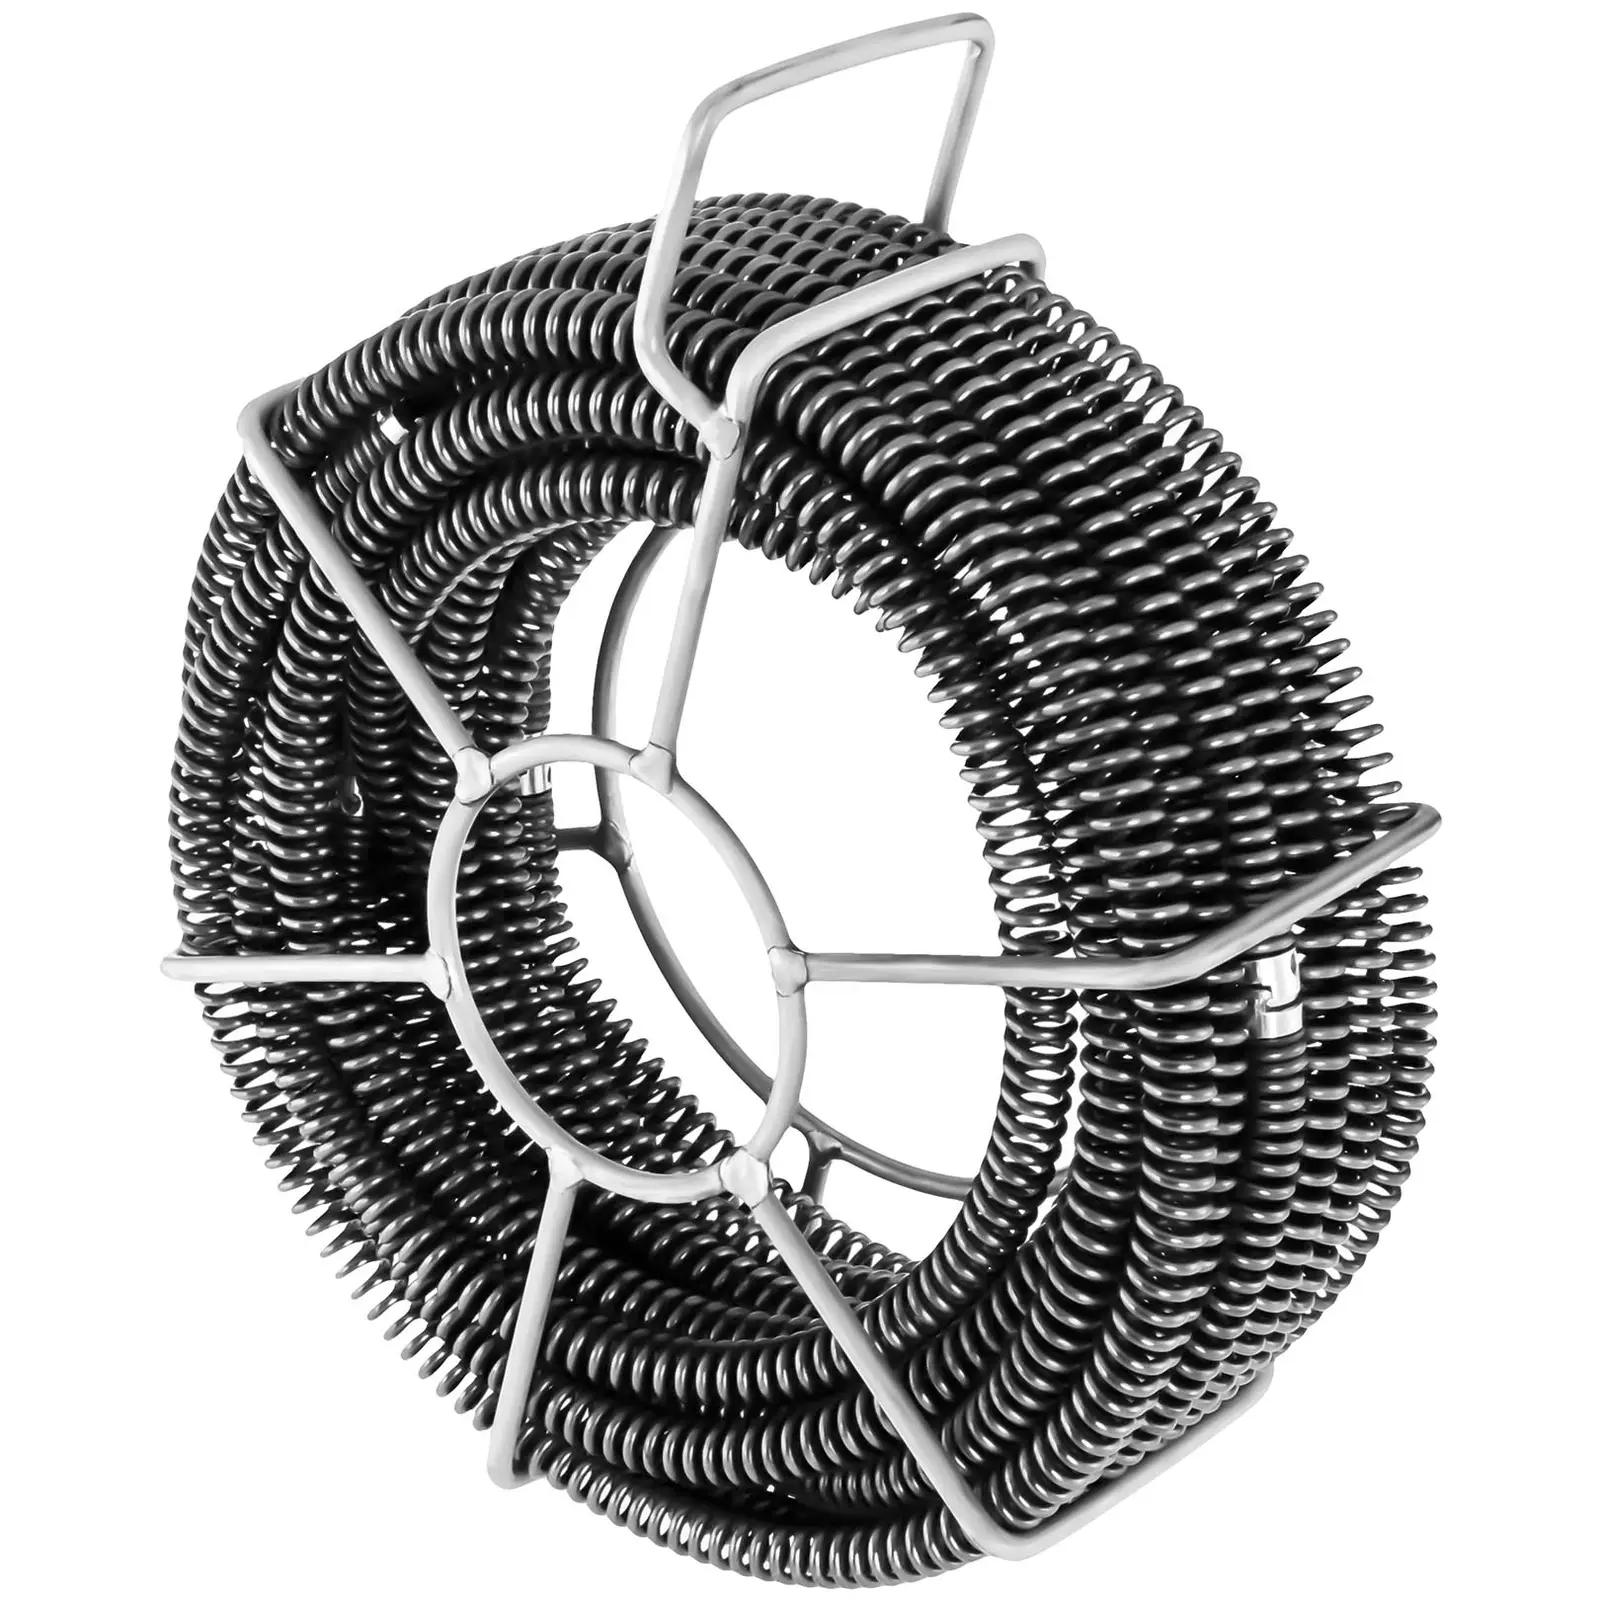 Водопроводни спираловидни маркуч - Комплект от 6 x 2,45 м - Ø 16 мм